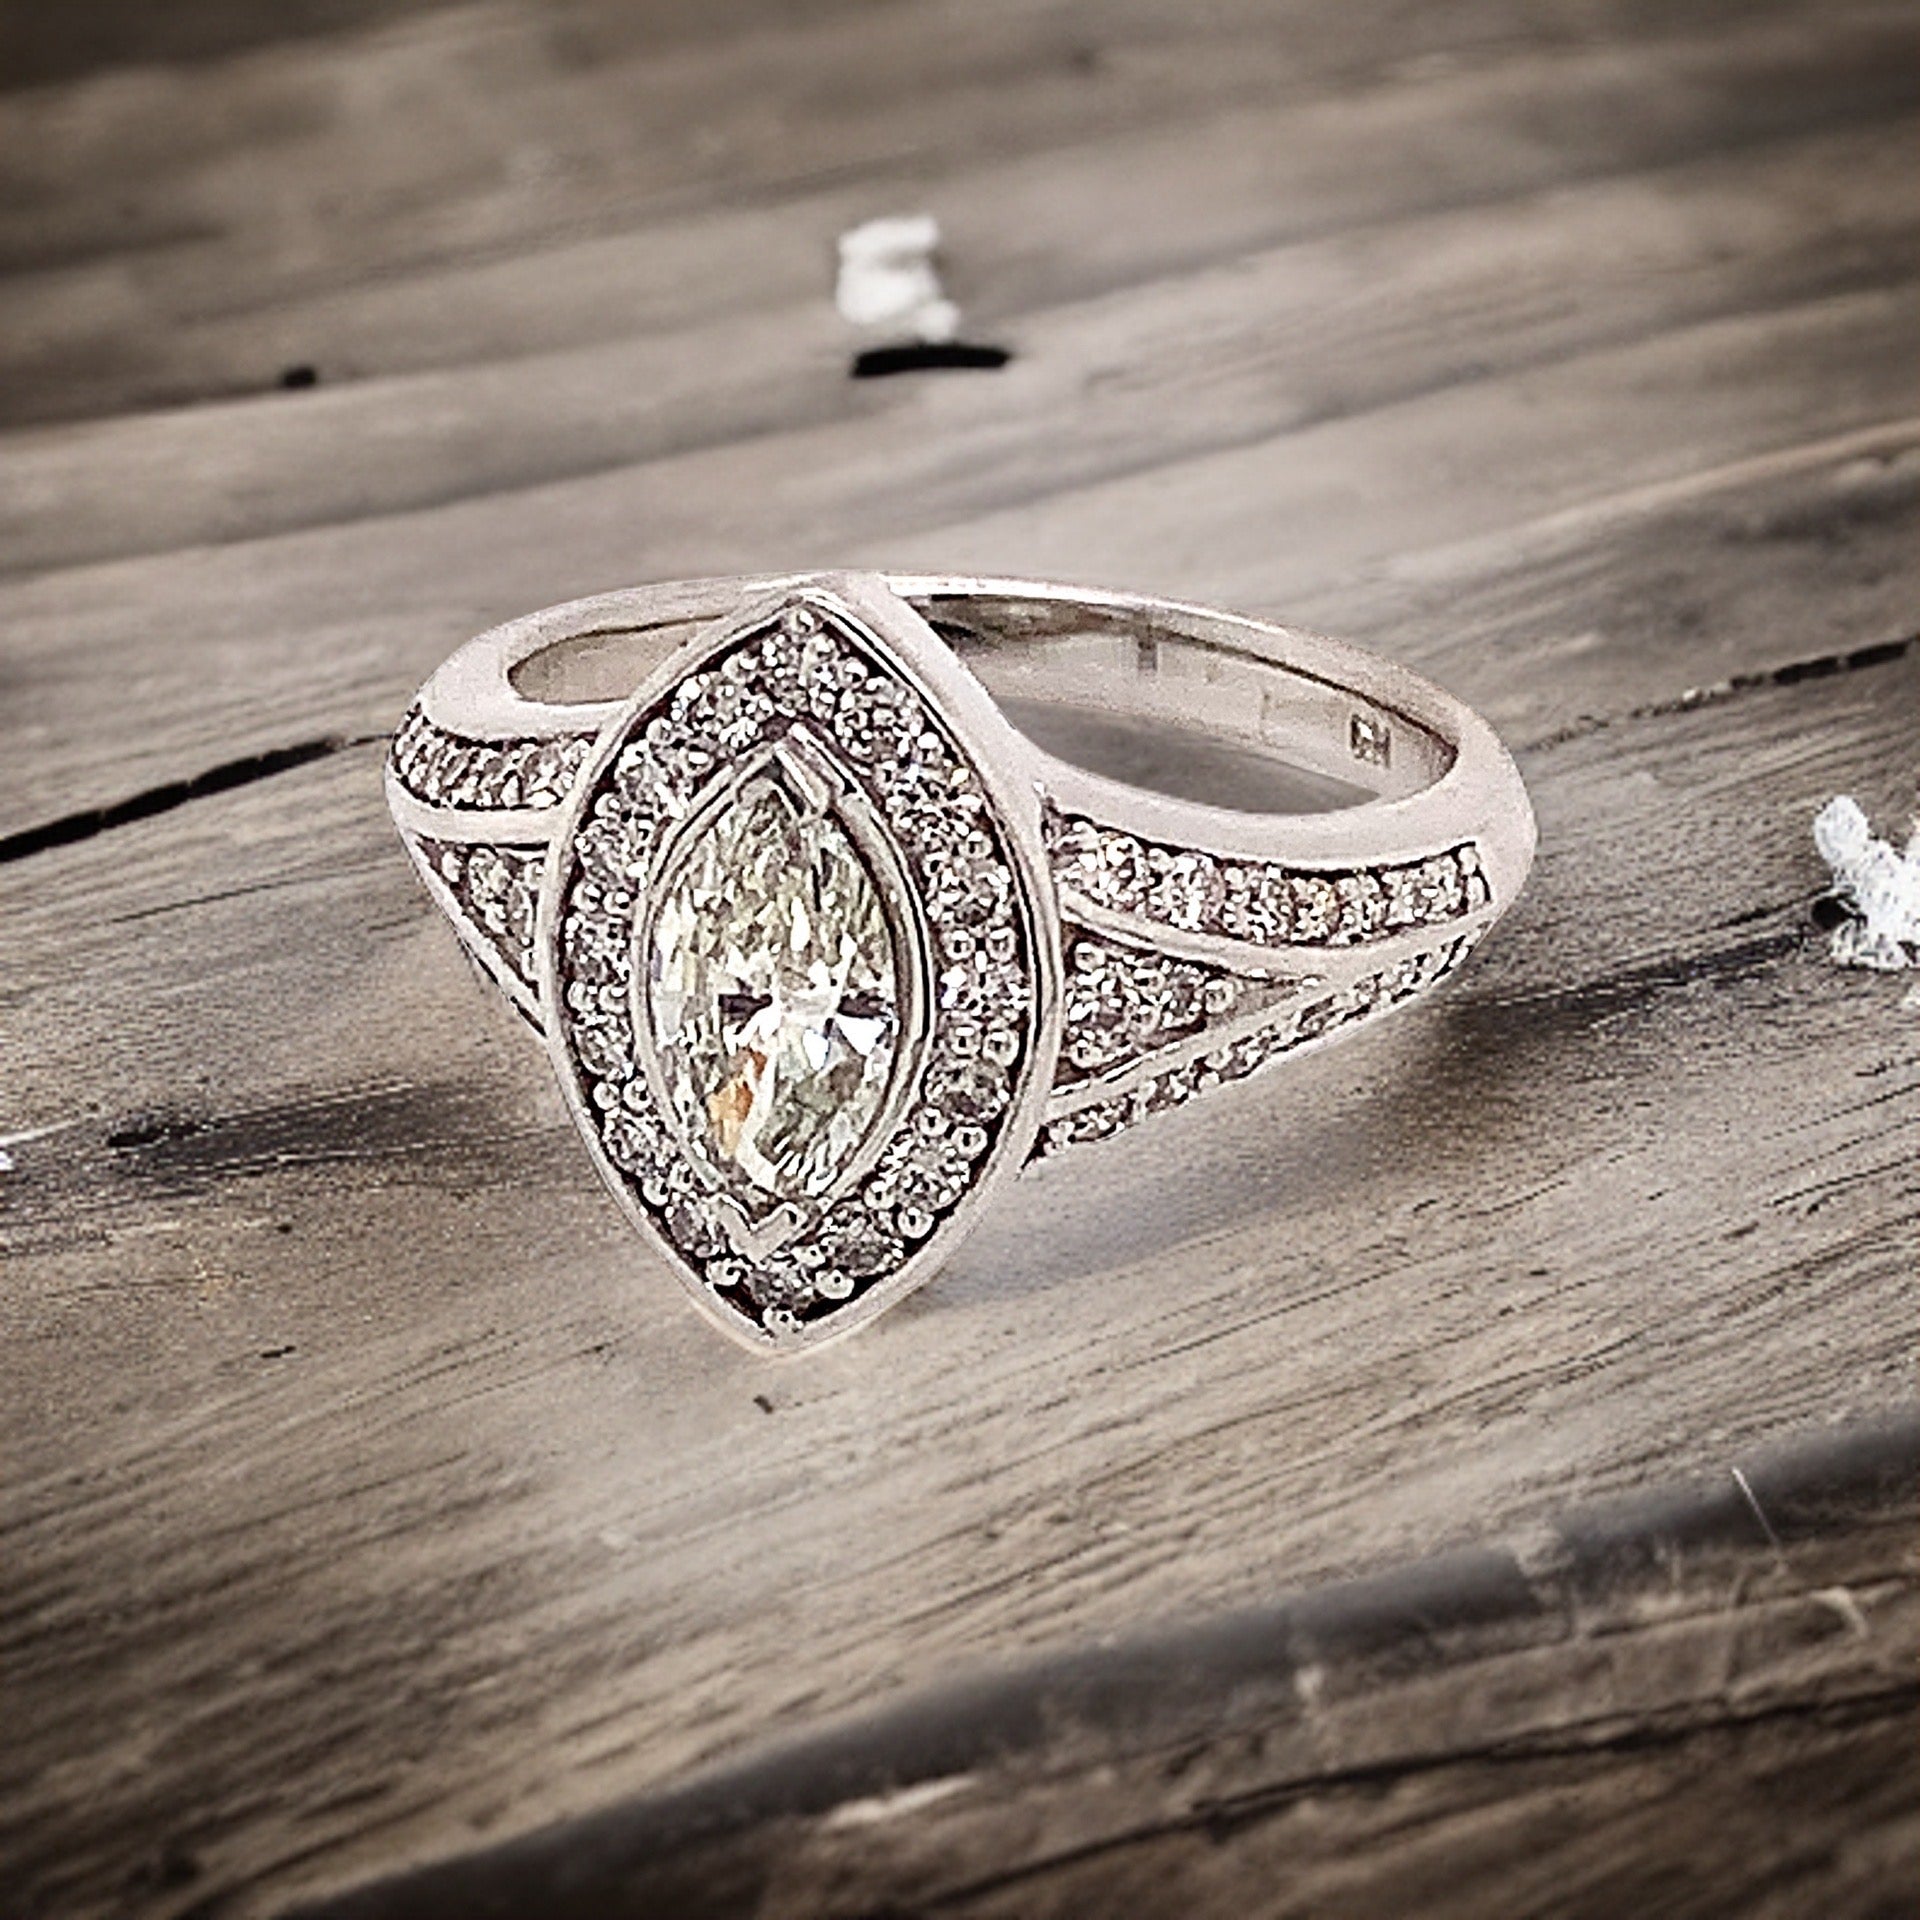 Diamond Ring Size 6.5 14k White Gold 0.45 TCW 4.88g Certified $5,950 120603 - Certified Fine Jewelry